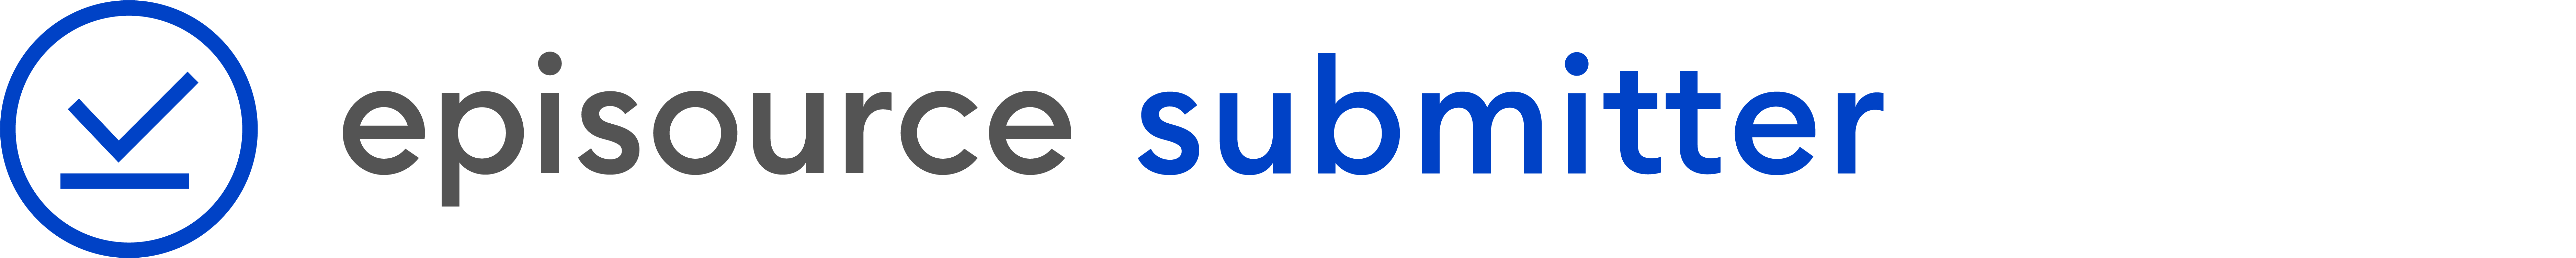 Episource Submitter logo